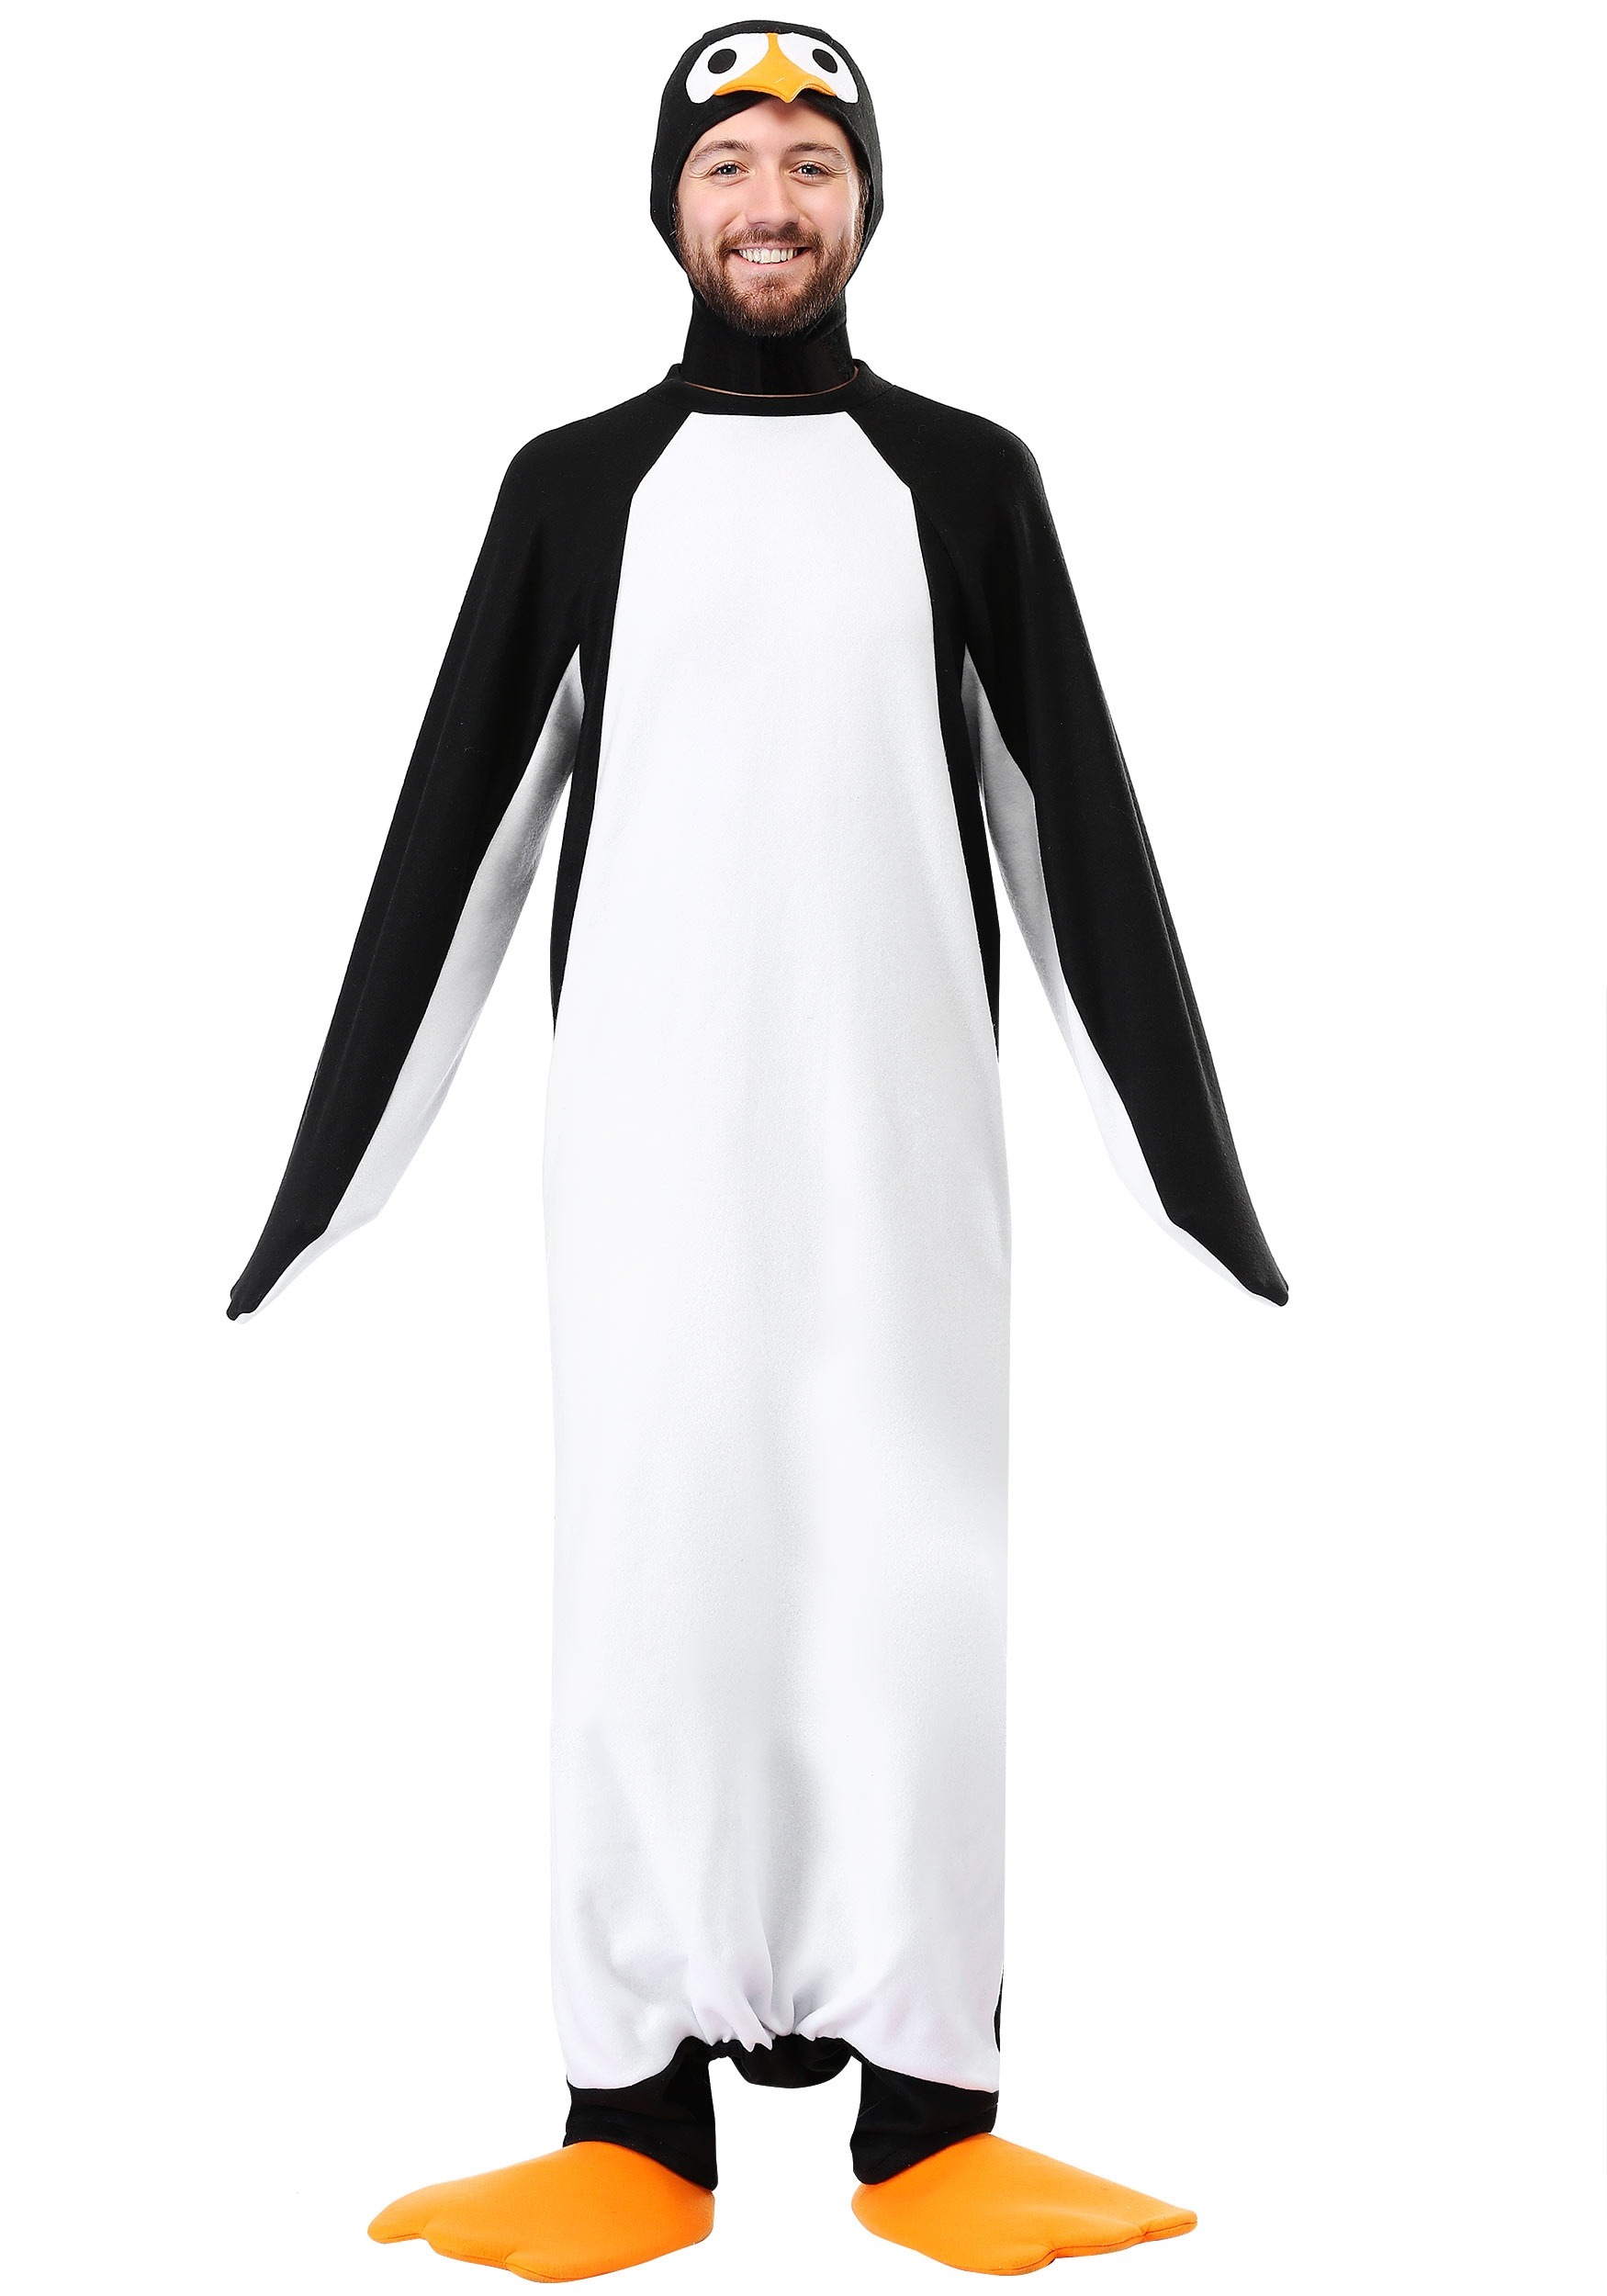 Photos - Fancy Dress FUN Costumes Penguin Plus Size Costume Black/White FUN2178PL